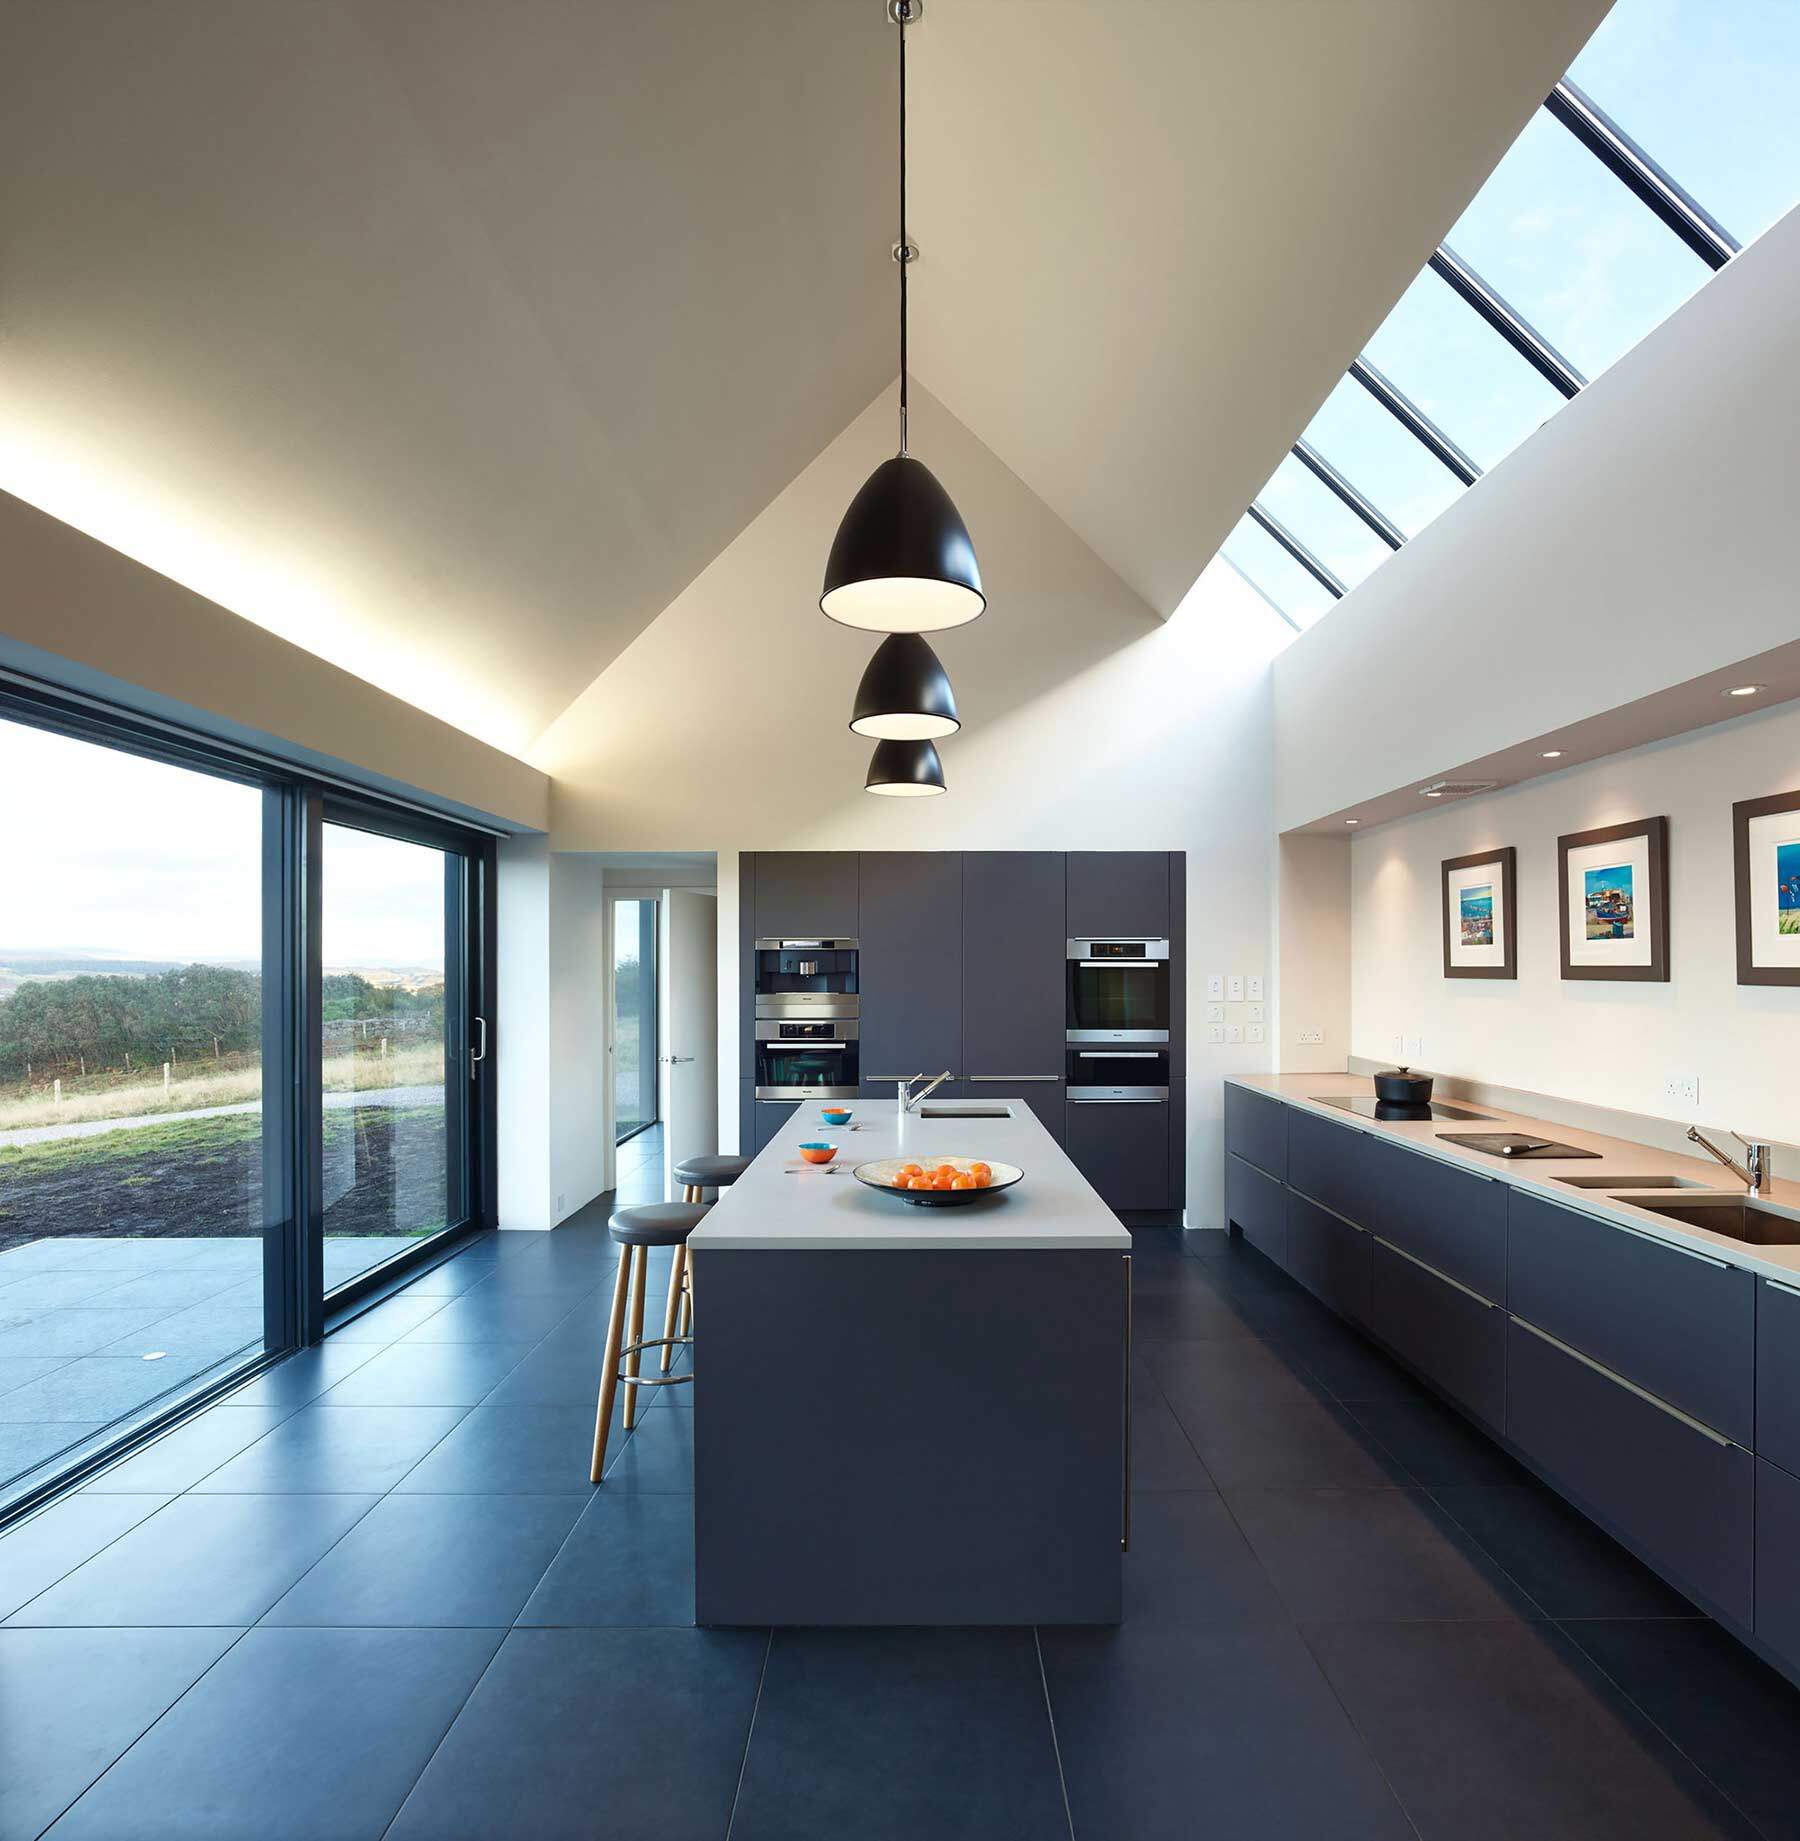 Skye Island house inspired by Scottish farm barns - HomeWorldDesign (3)